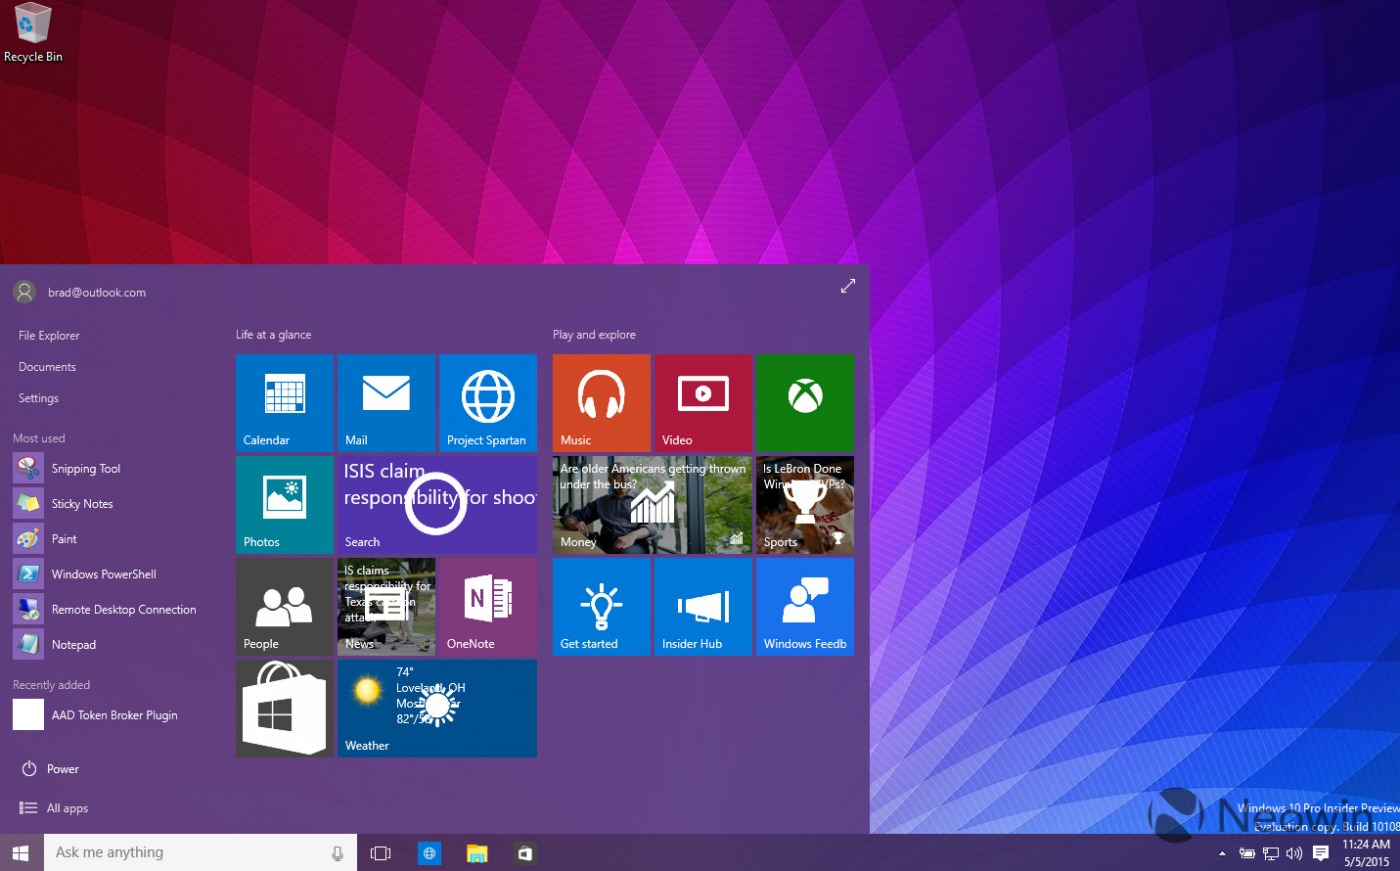 Windows 10 Pro Insider Preview. Windows RT update 3. Windows RT build 8330. Windows 10 build 10074 connection.